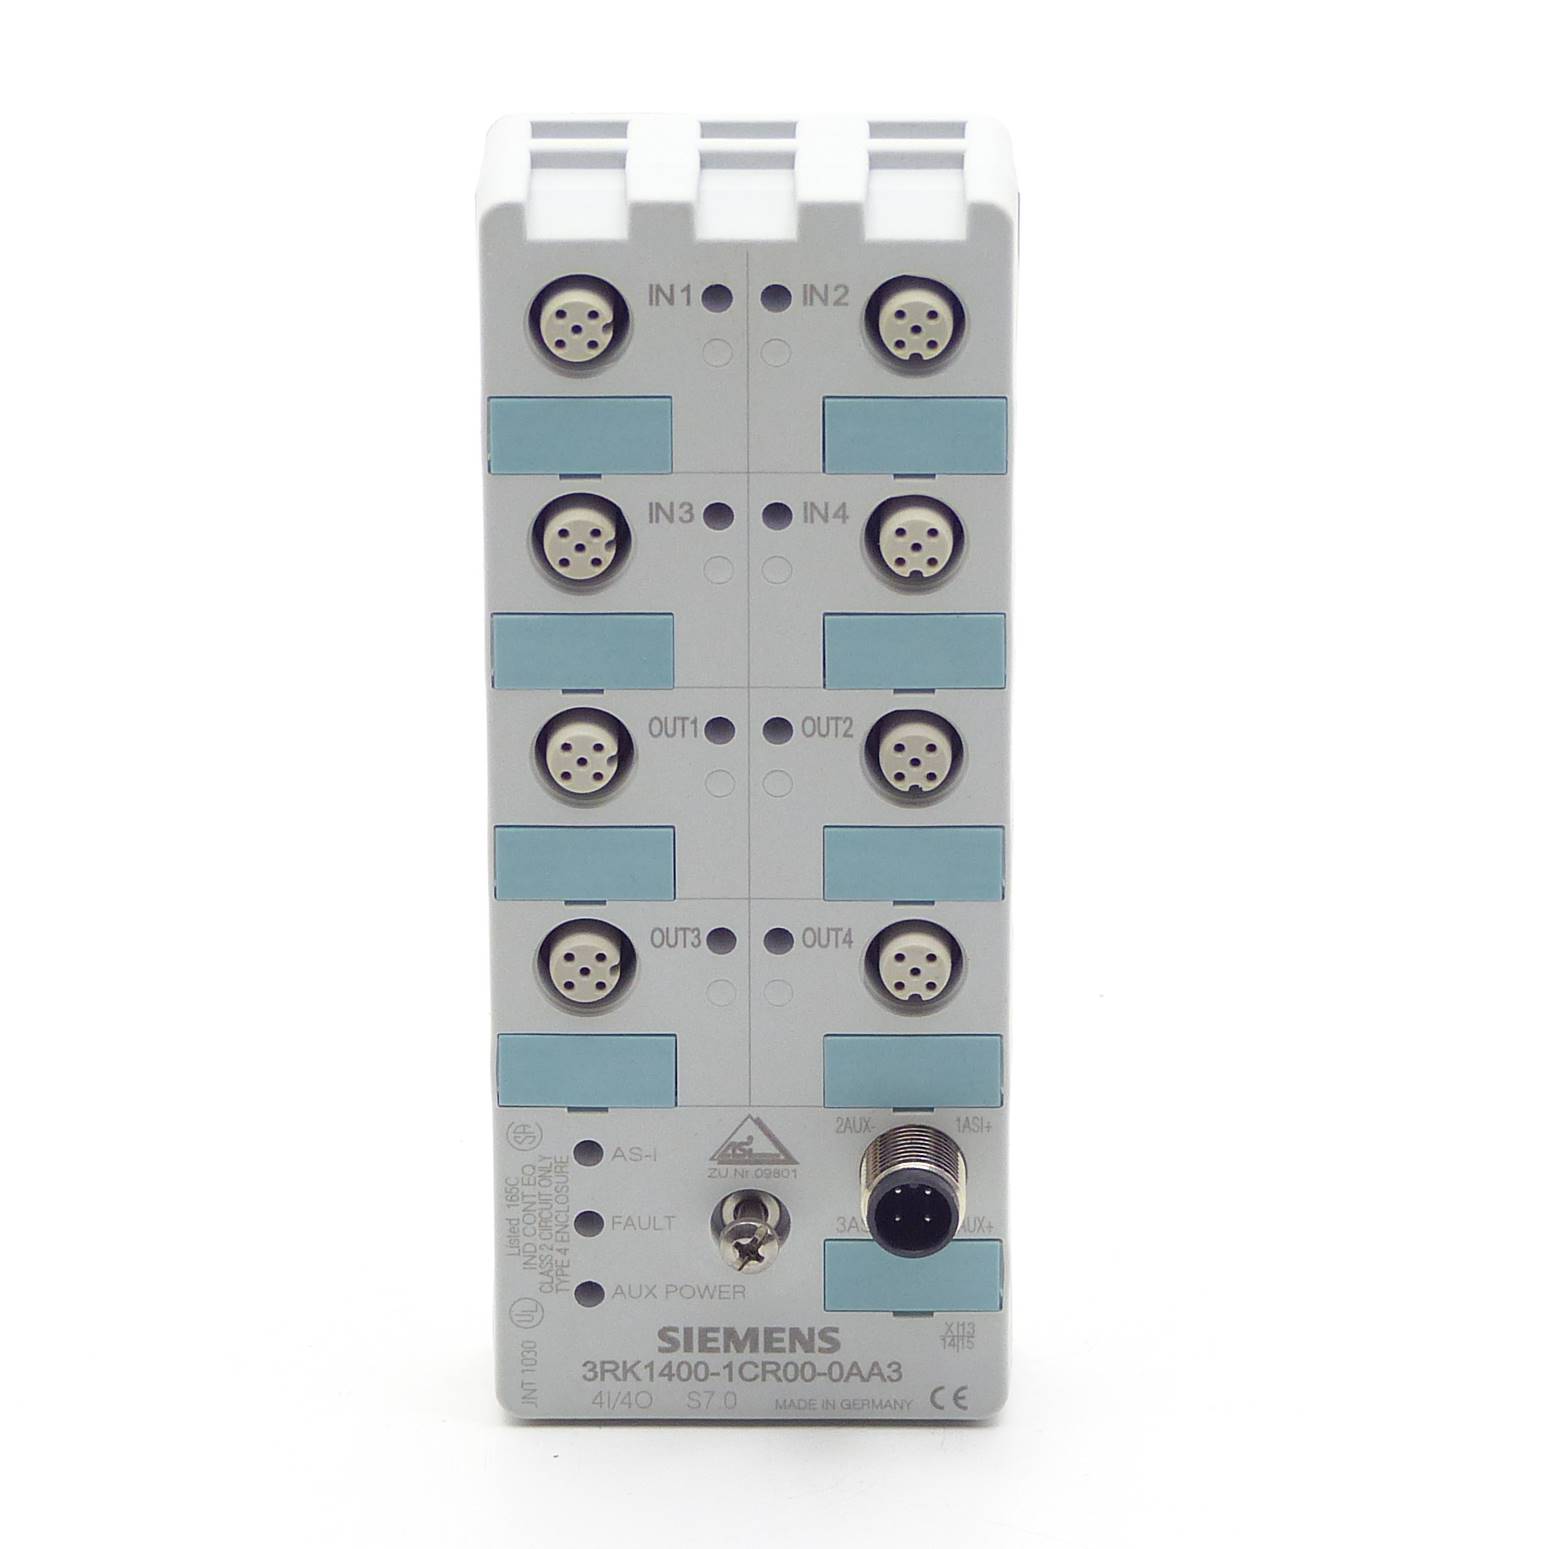 AS-Interface Compact Module K60R 